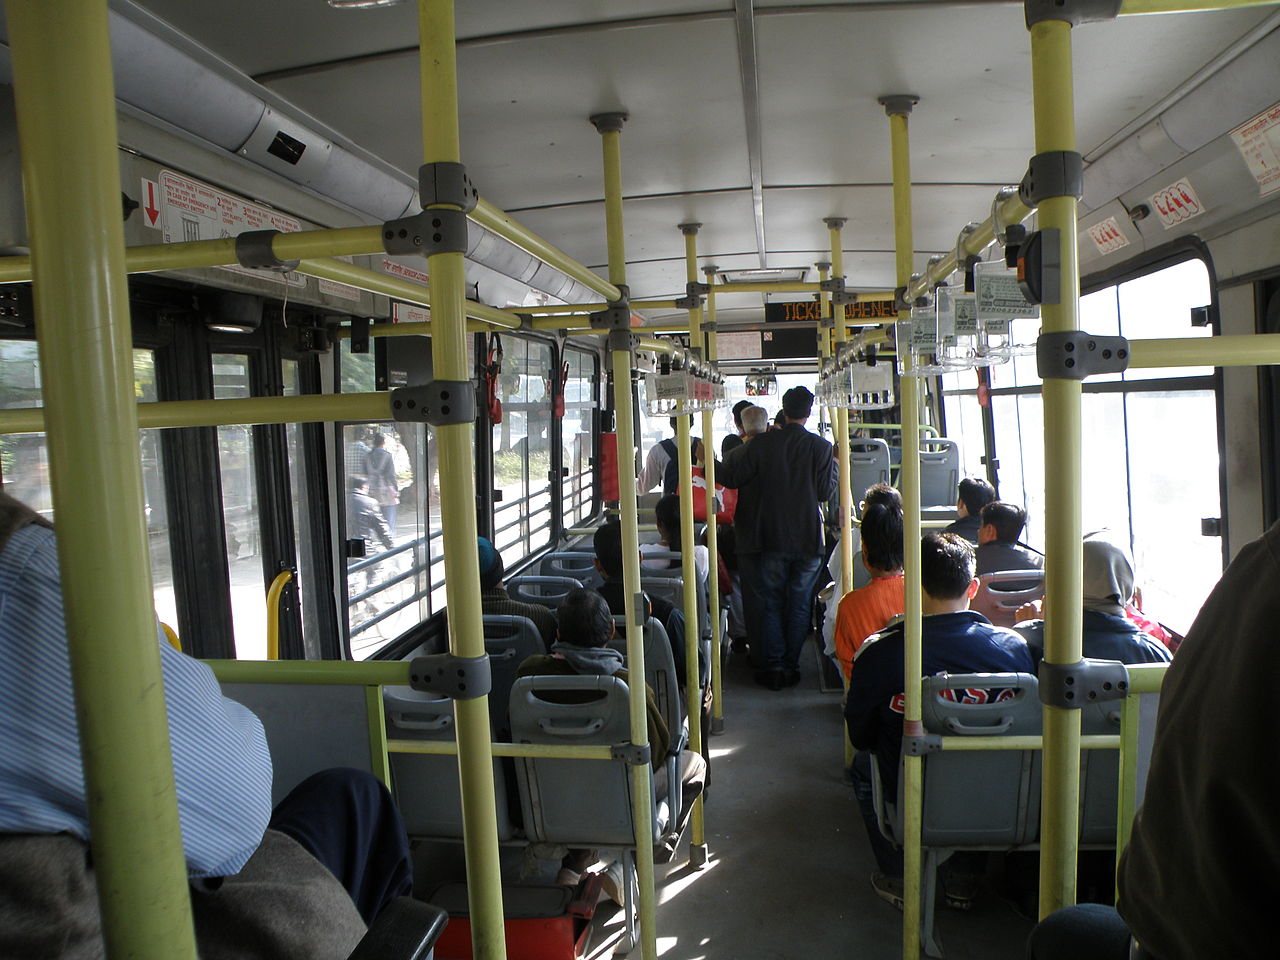 Inside a DTC Bus. (Source: Wikimedia Commons)